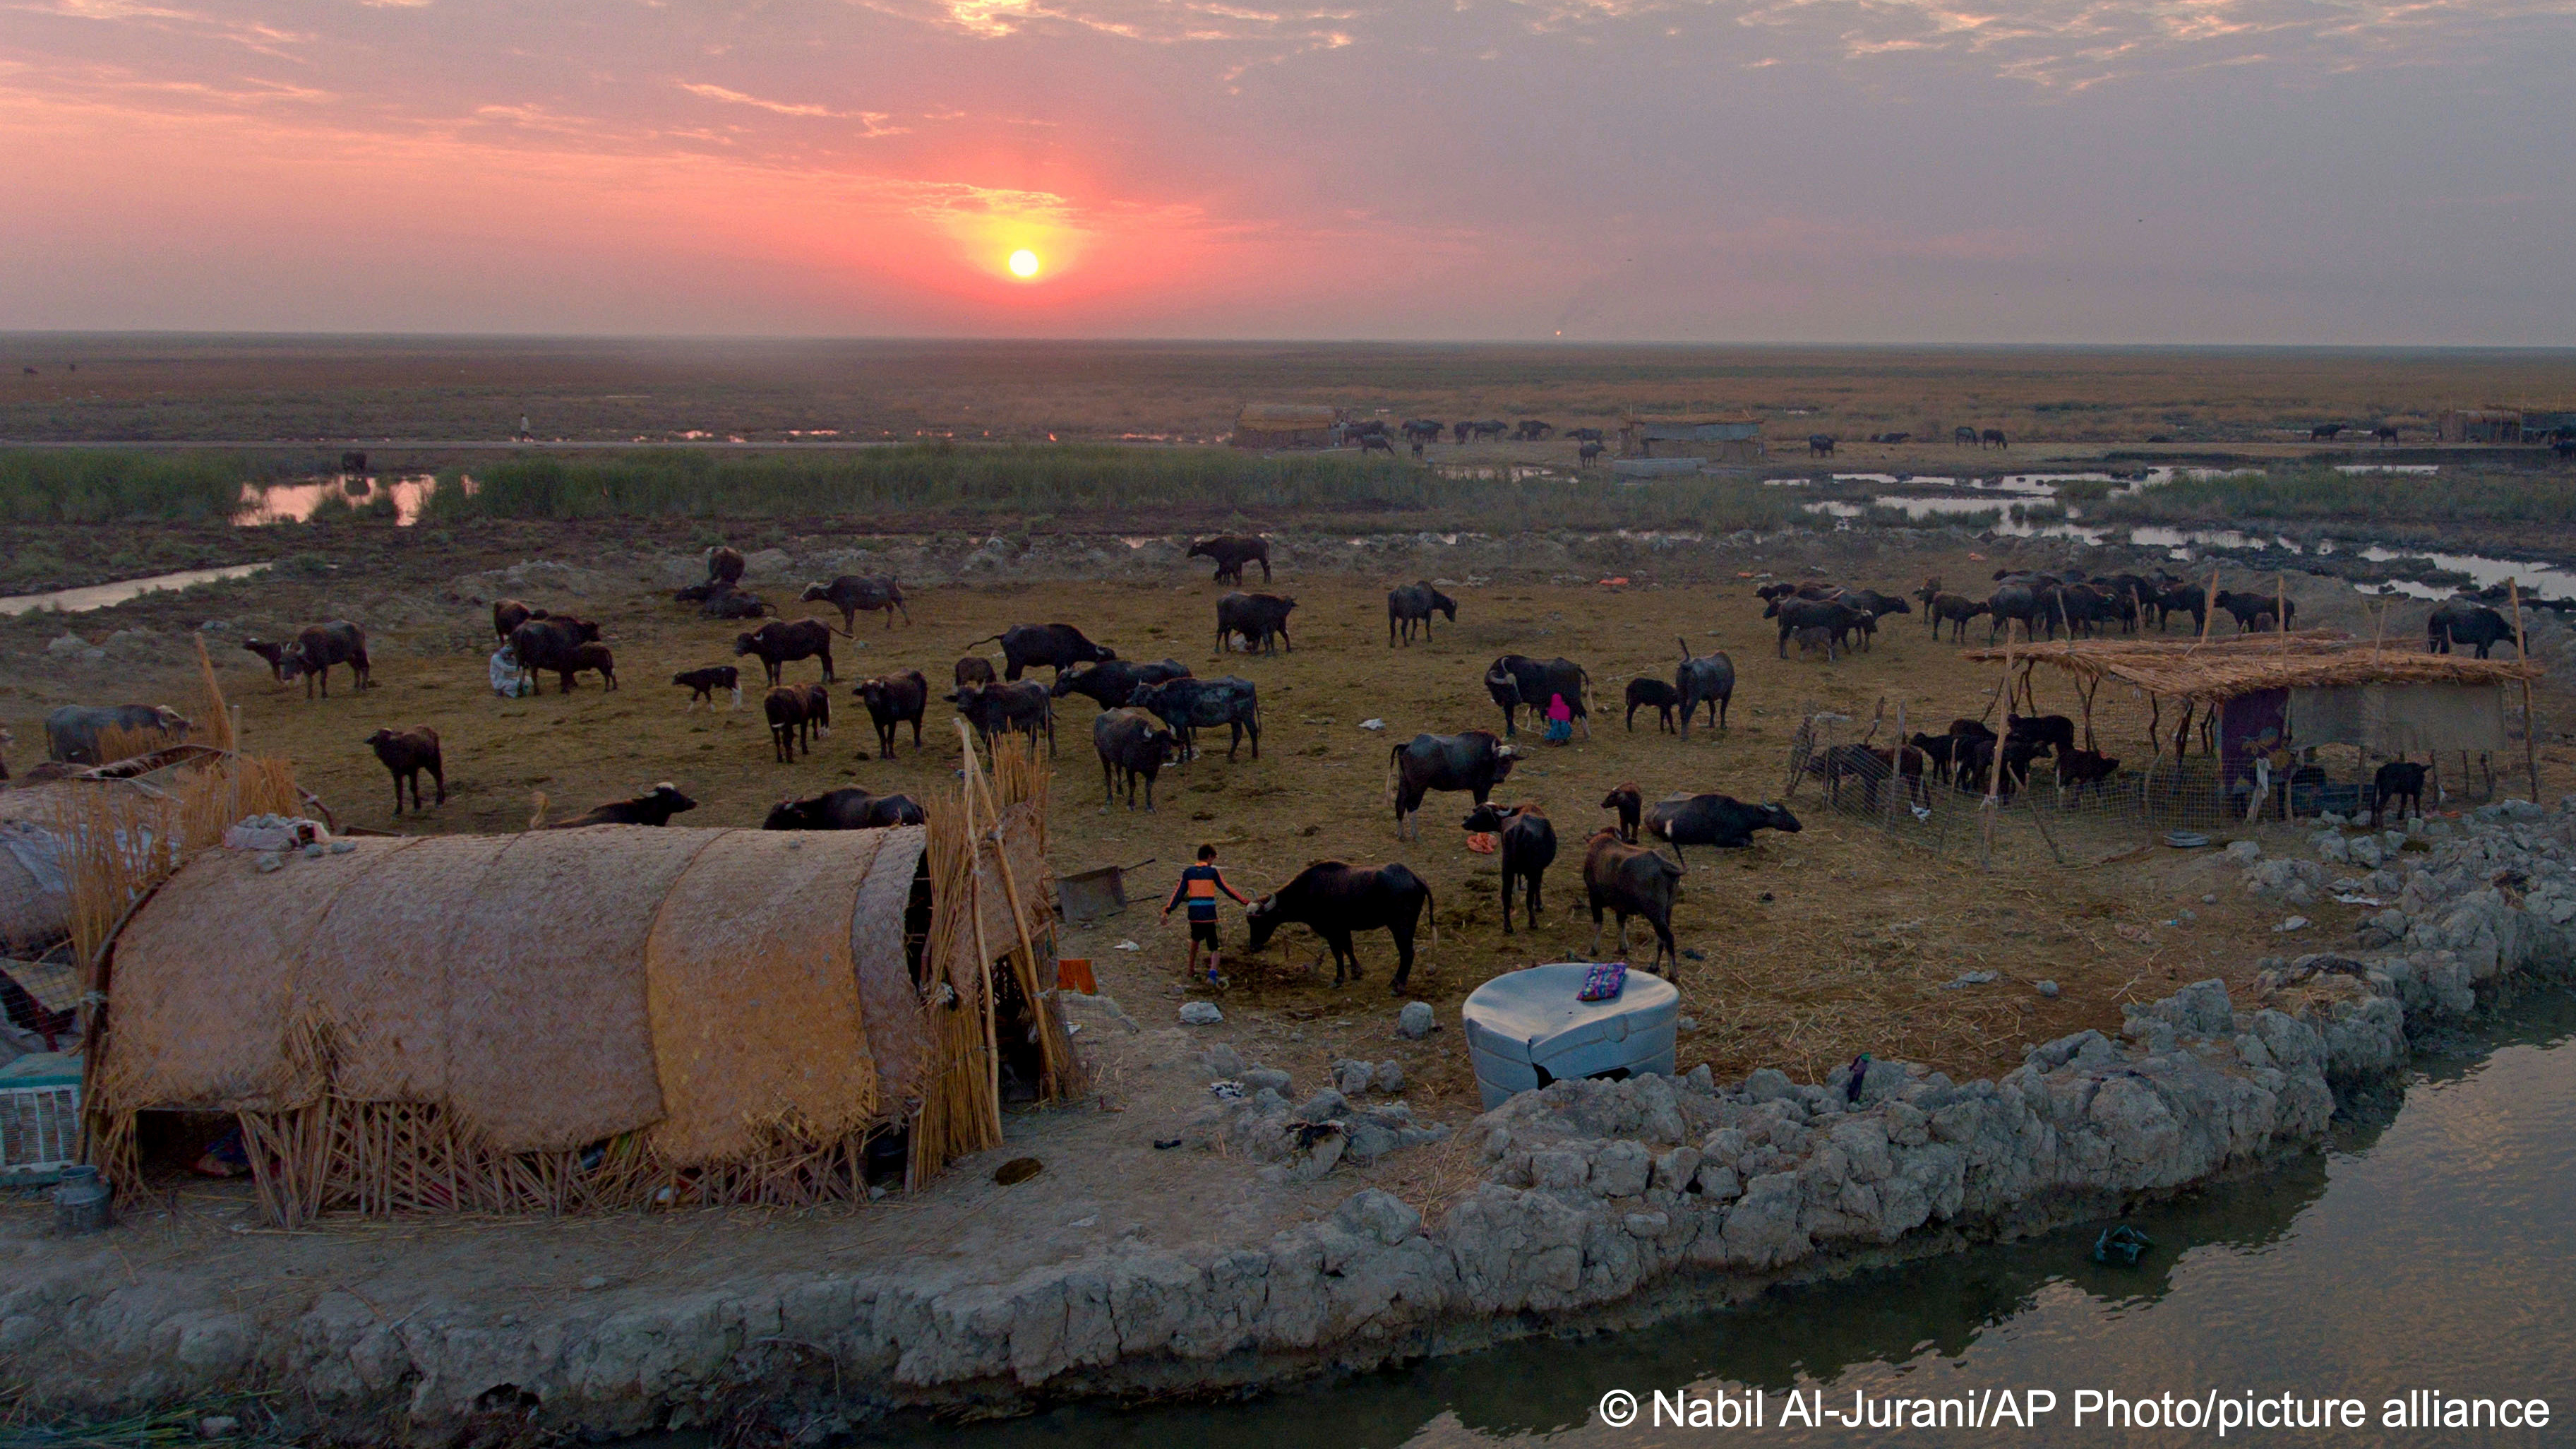 The sun sets over an island paddock for water buffalo in Chibayish, Dhi Qar Governate, southern Iraq (photo: Nabil al-Jurani/AP Photo/picture alliance)